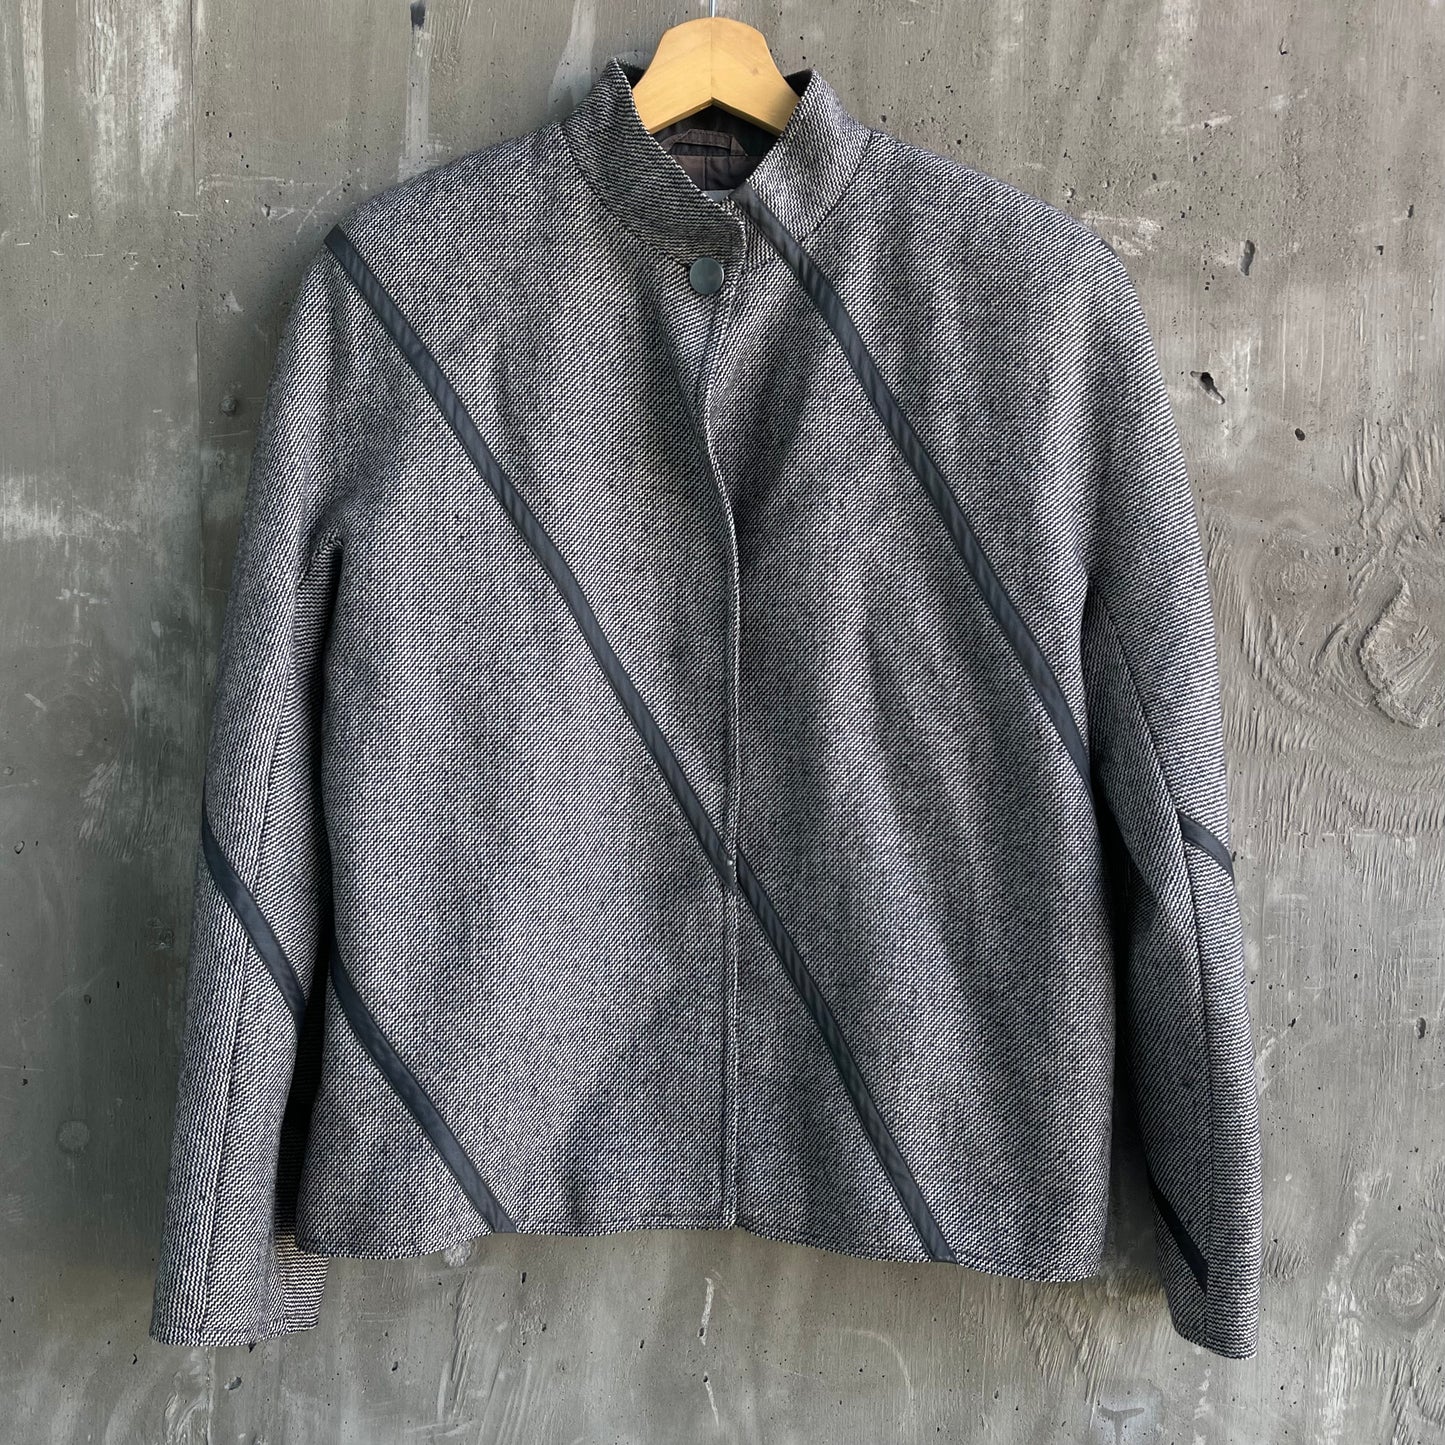 Vintage 70’s Gianni Versace Wool Cashmere Jacket